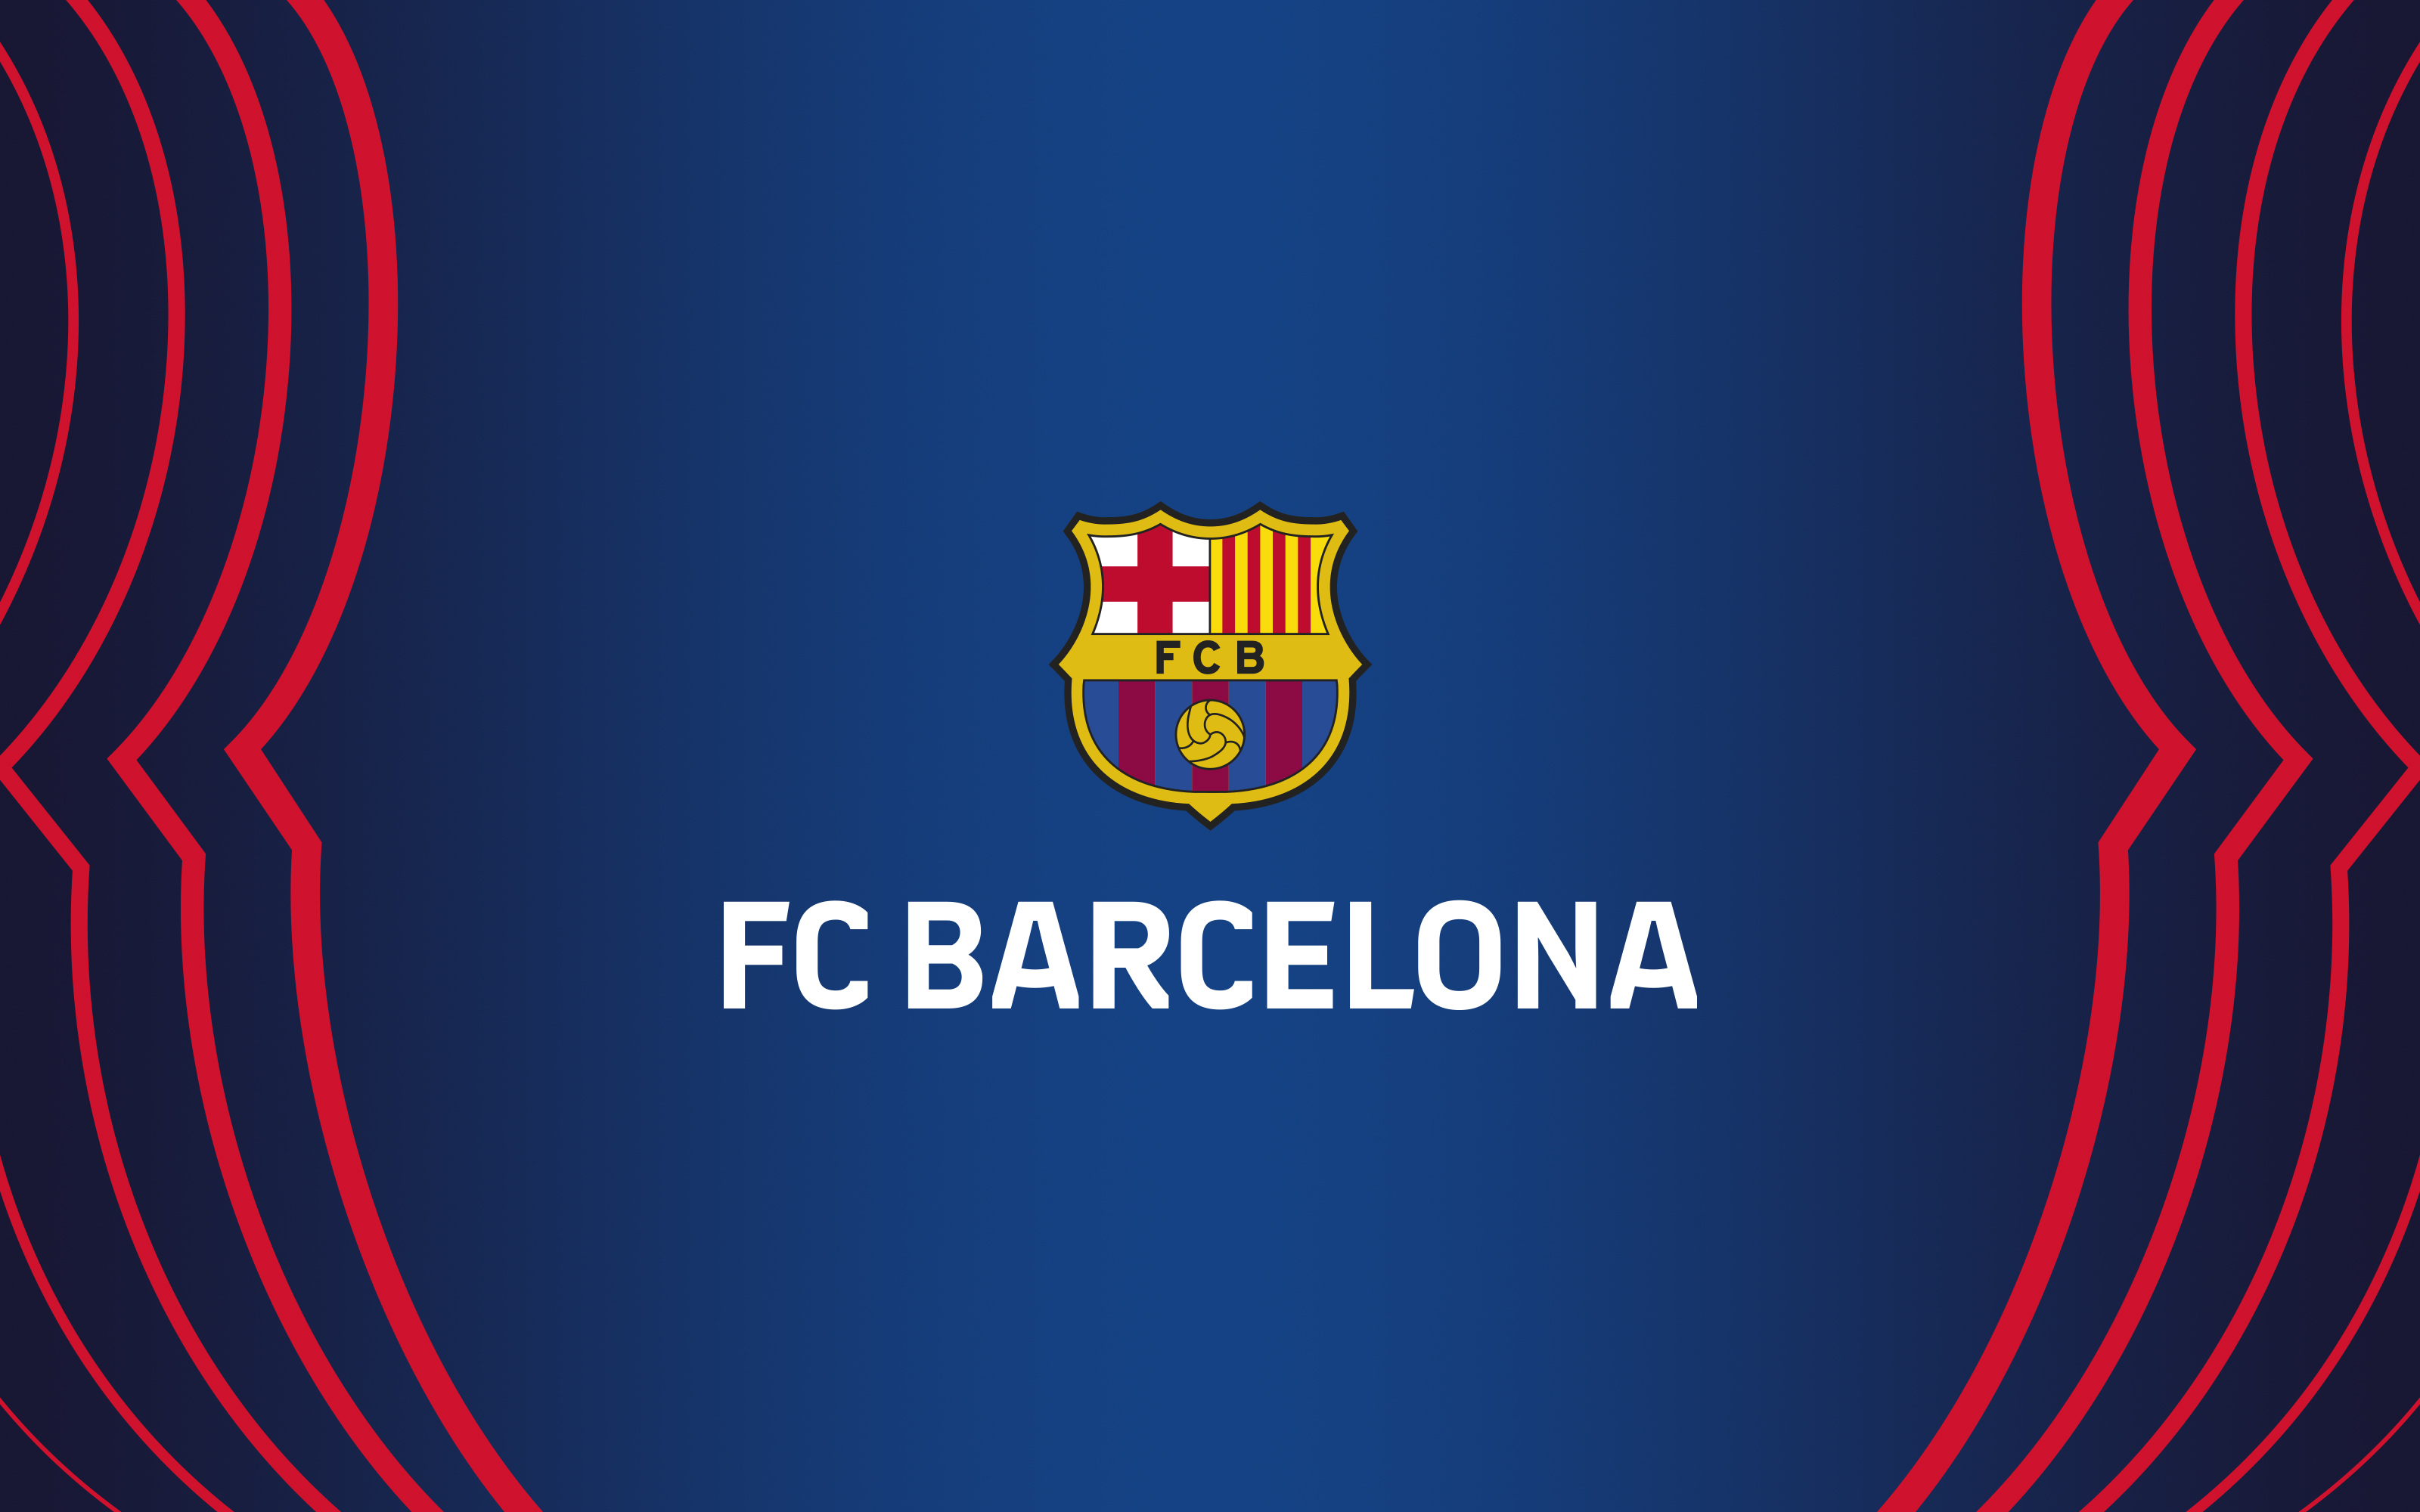 FC Barcelona (@FCBarcelona) / Twitter